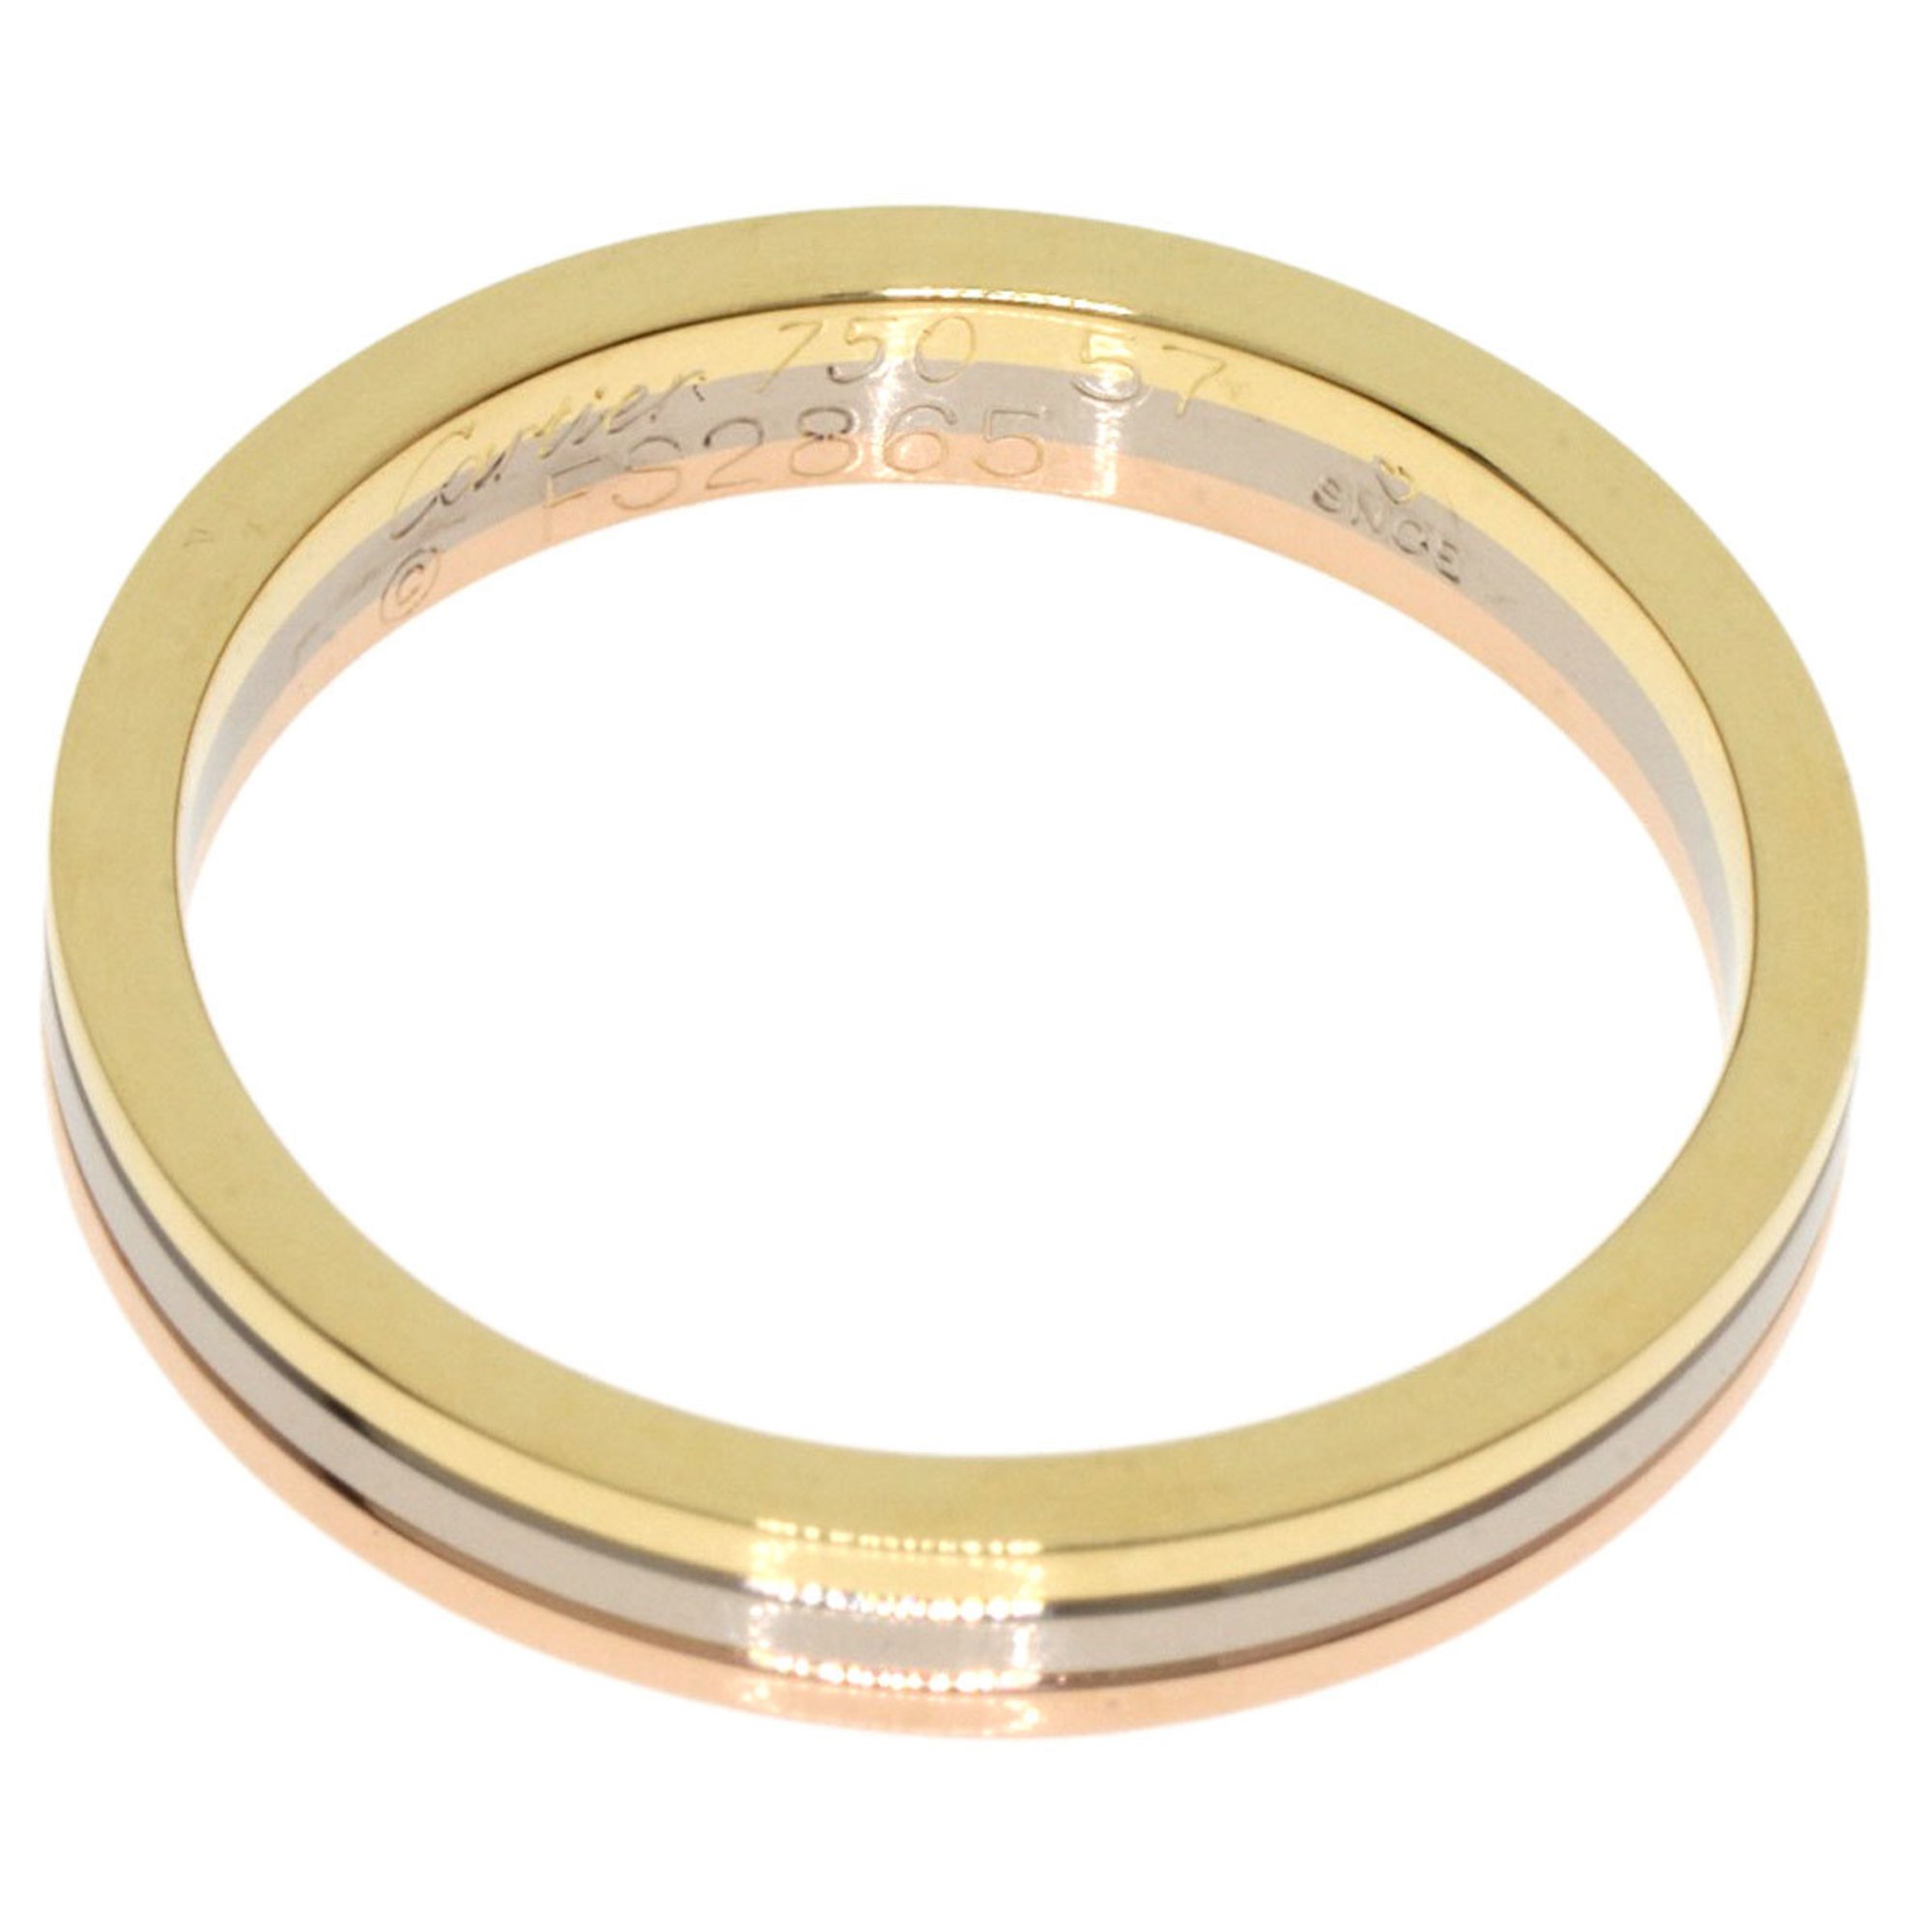 Cartier Three Color #57 Ring, K18 Yellow Gold, K18WG, K18PG, Women's